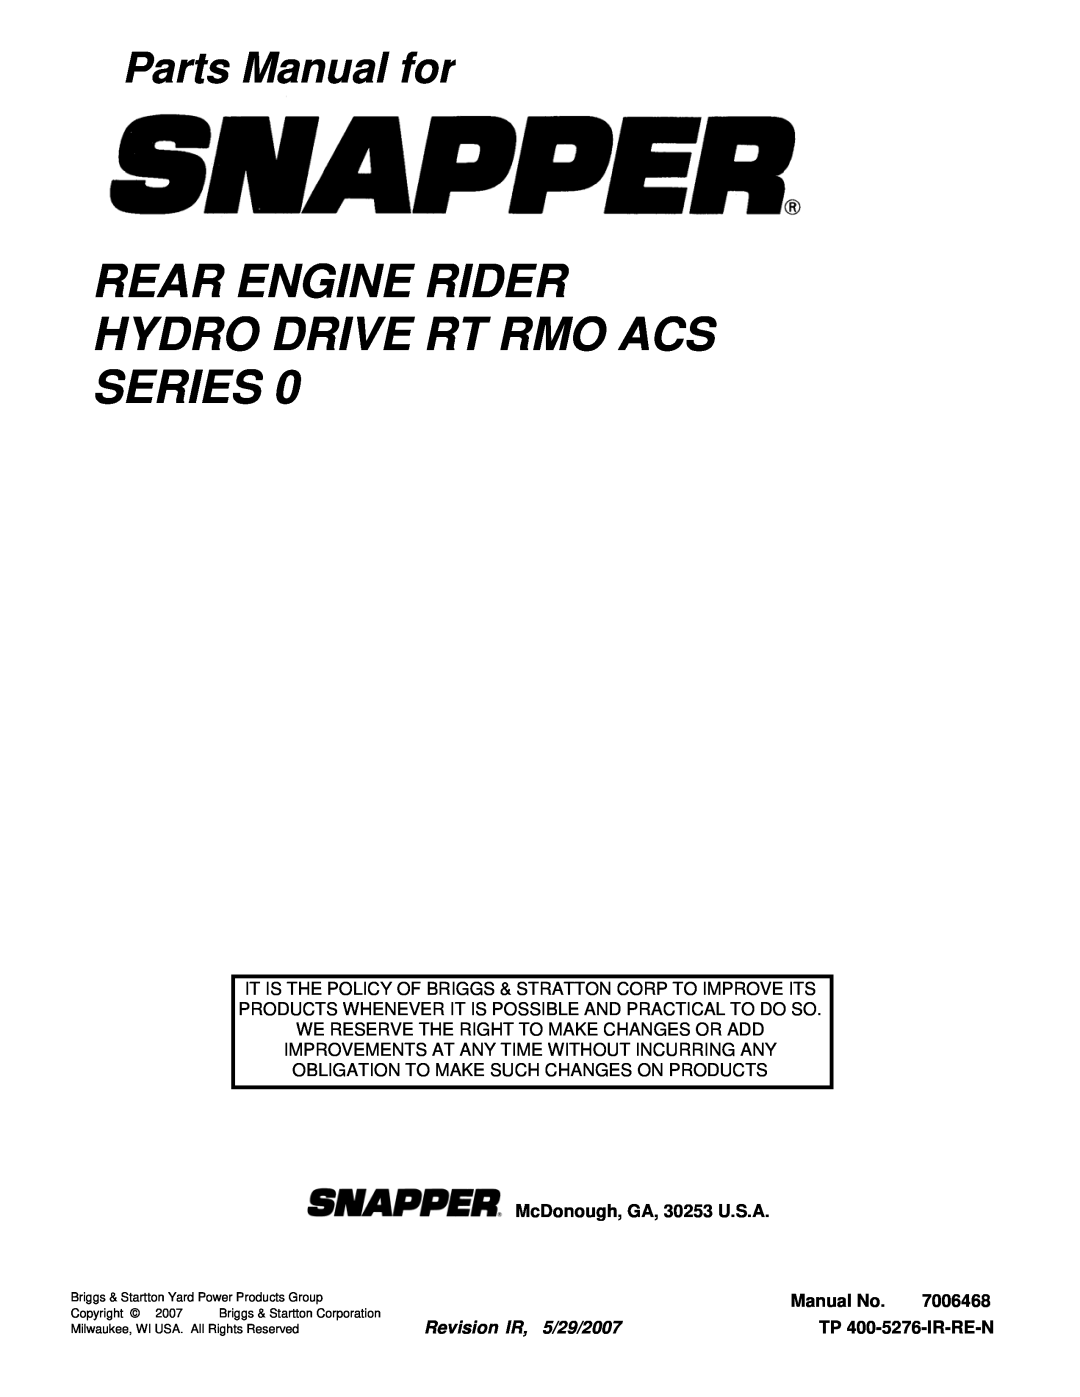 Snapper RT1330, RT1330, RT1330E, RT1330E, RT1330E manual Rear Engine Rider Hydro Drive Rt Rmo Acs Series, Parts Manual for 